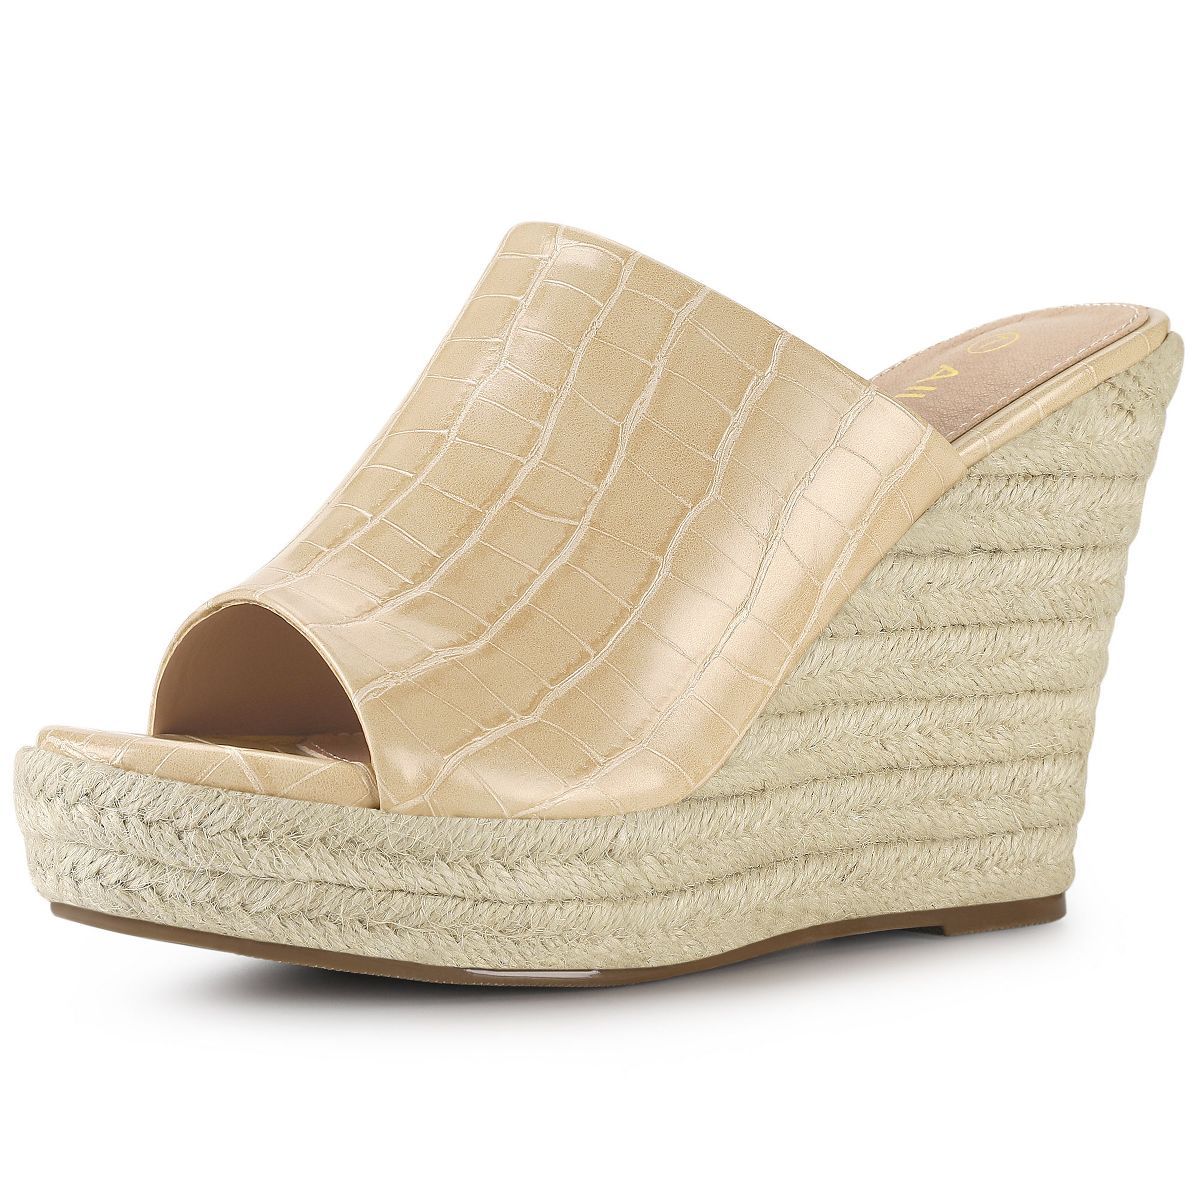 Allegra K Women's Espadrilles Wedges Sandals | Target